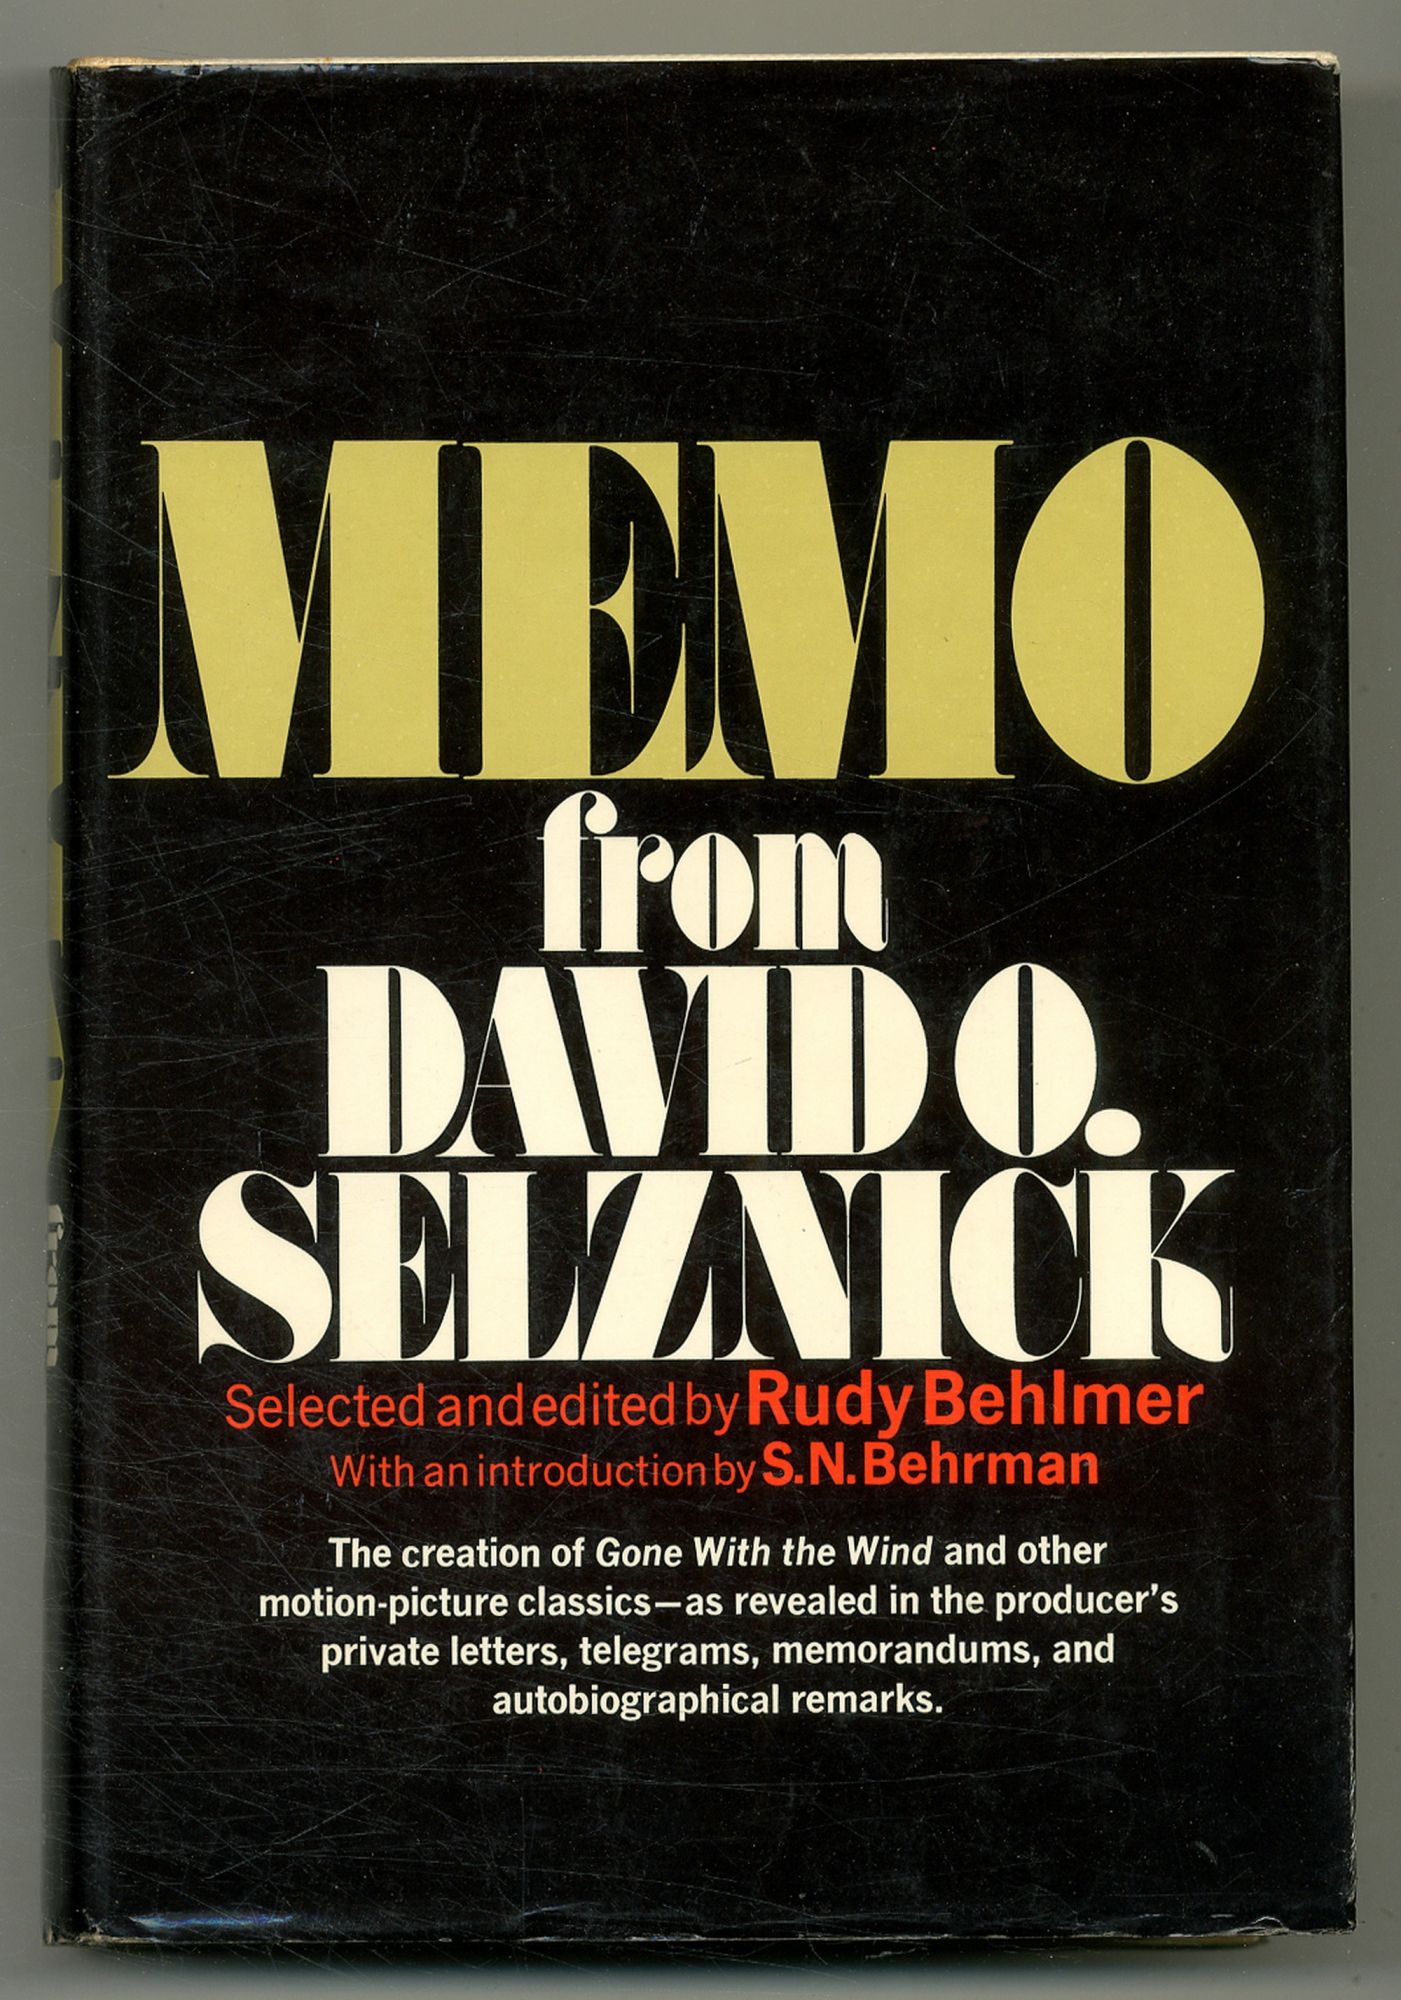 Memo from David O. Selznick - SELZNICK, David O. (BEHLMER, Rudy, selected and edited by)